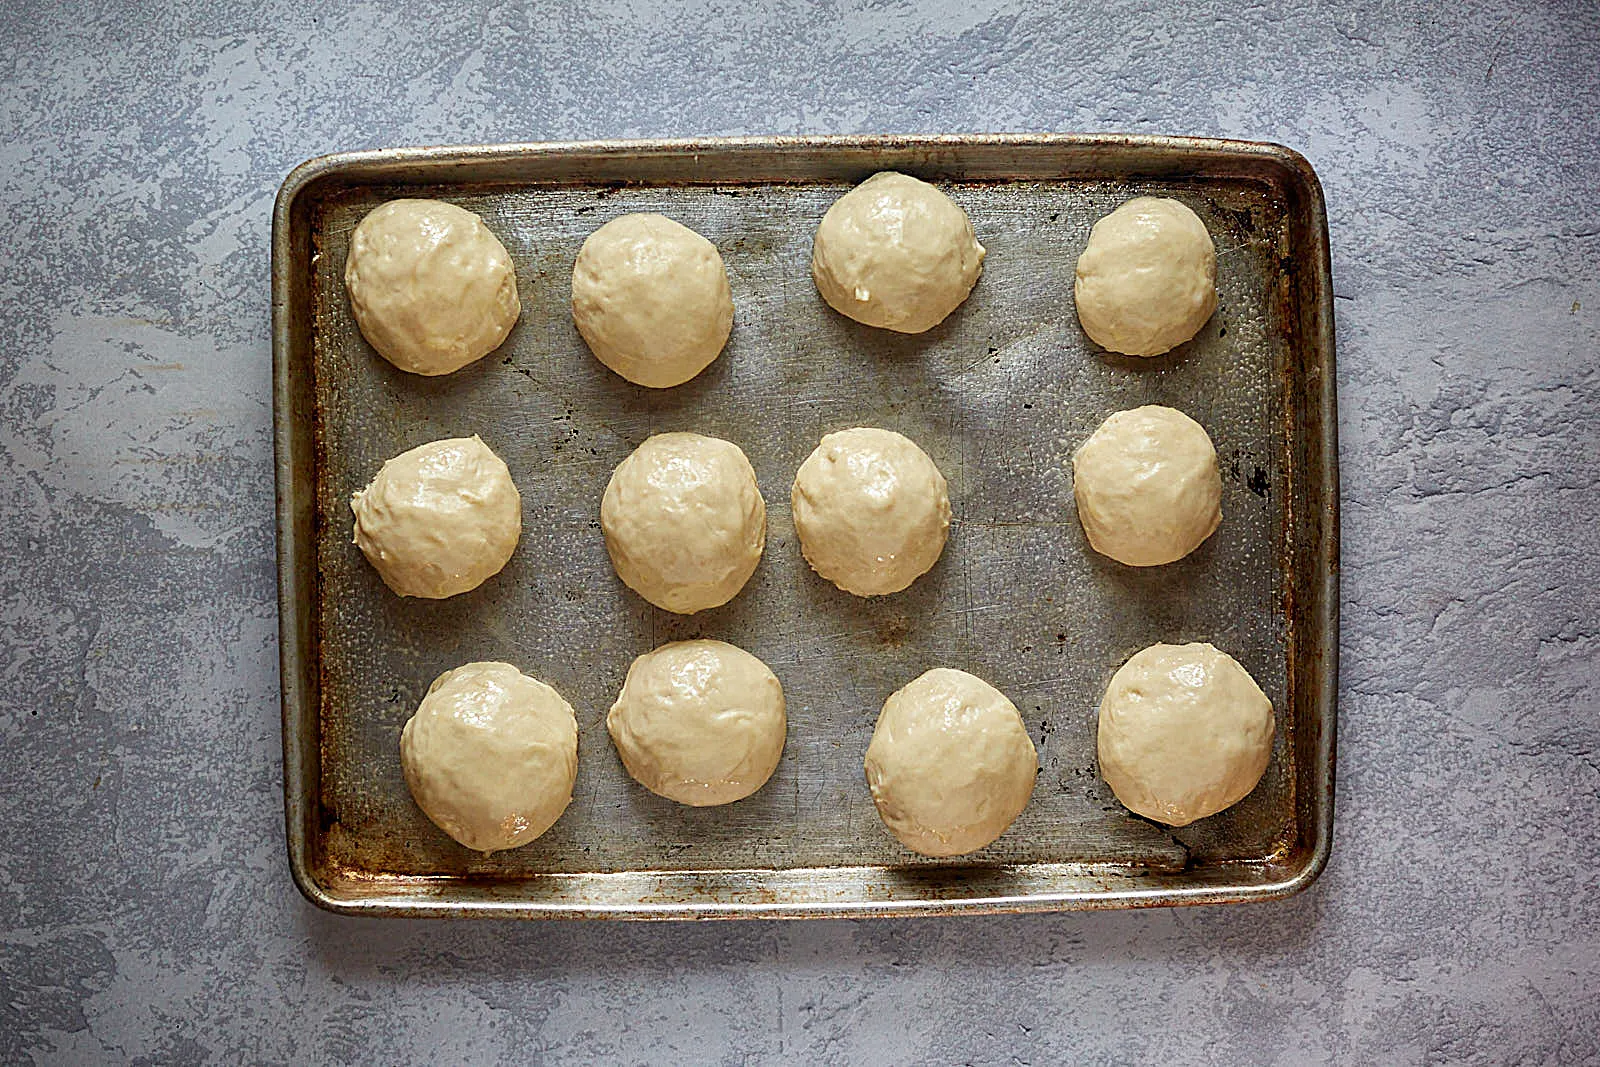 soft kolache dough formed into individual rolls on a sheet pan